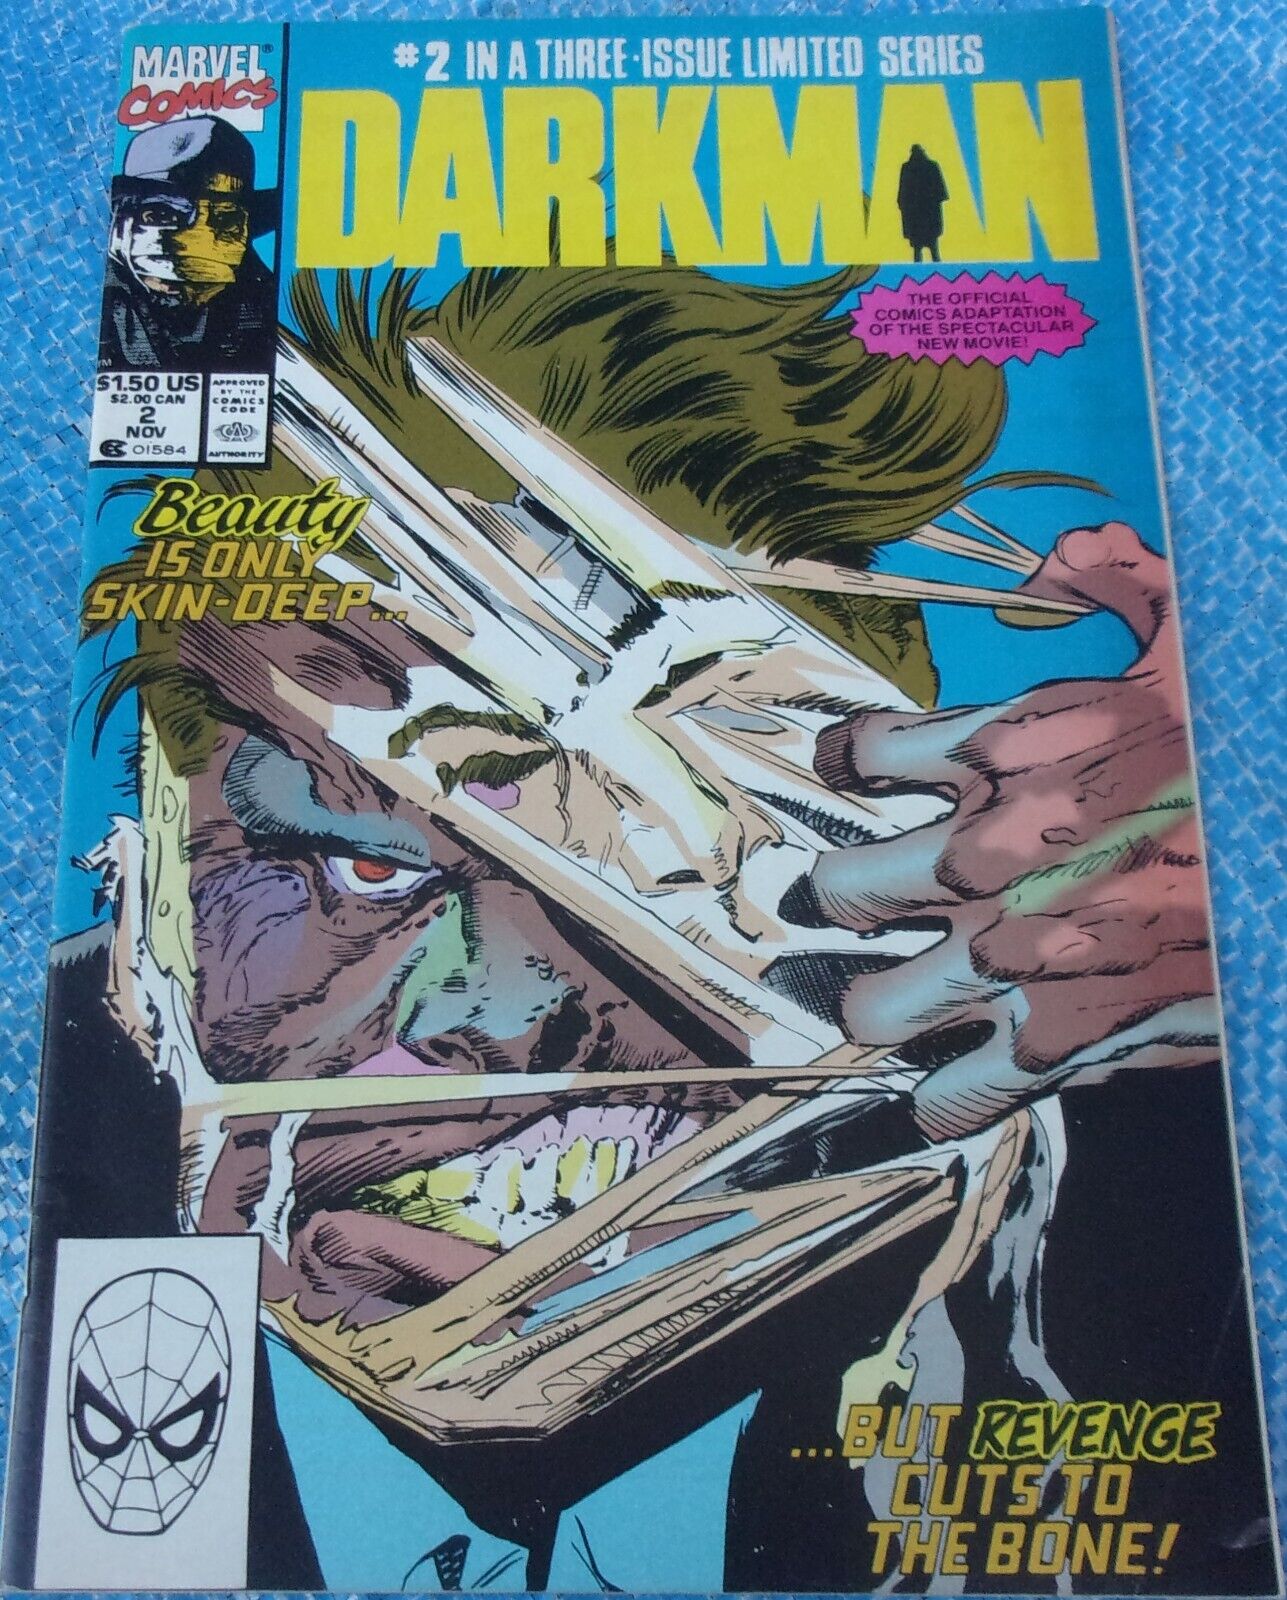 Marvel Comics Darkman #2 November 1990 Official Comics Adaptation Of The Movie